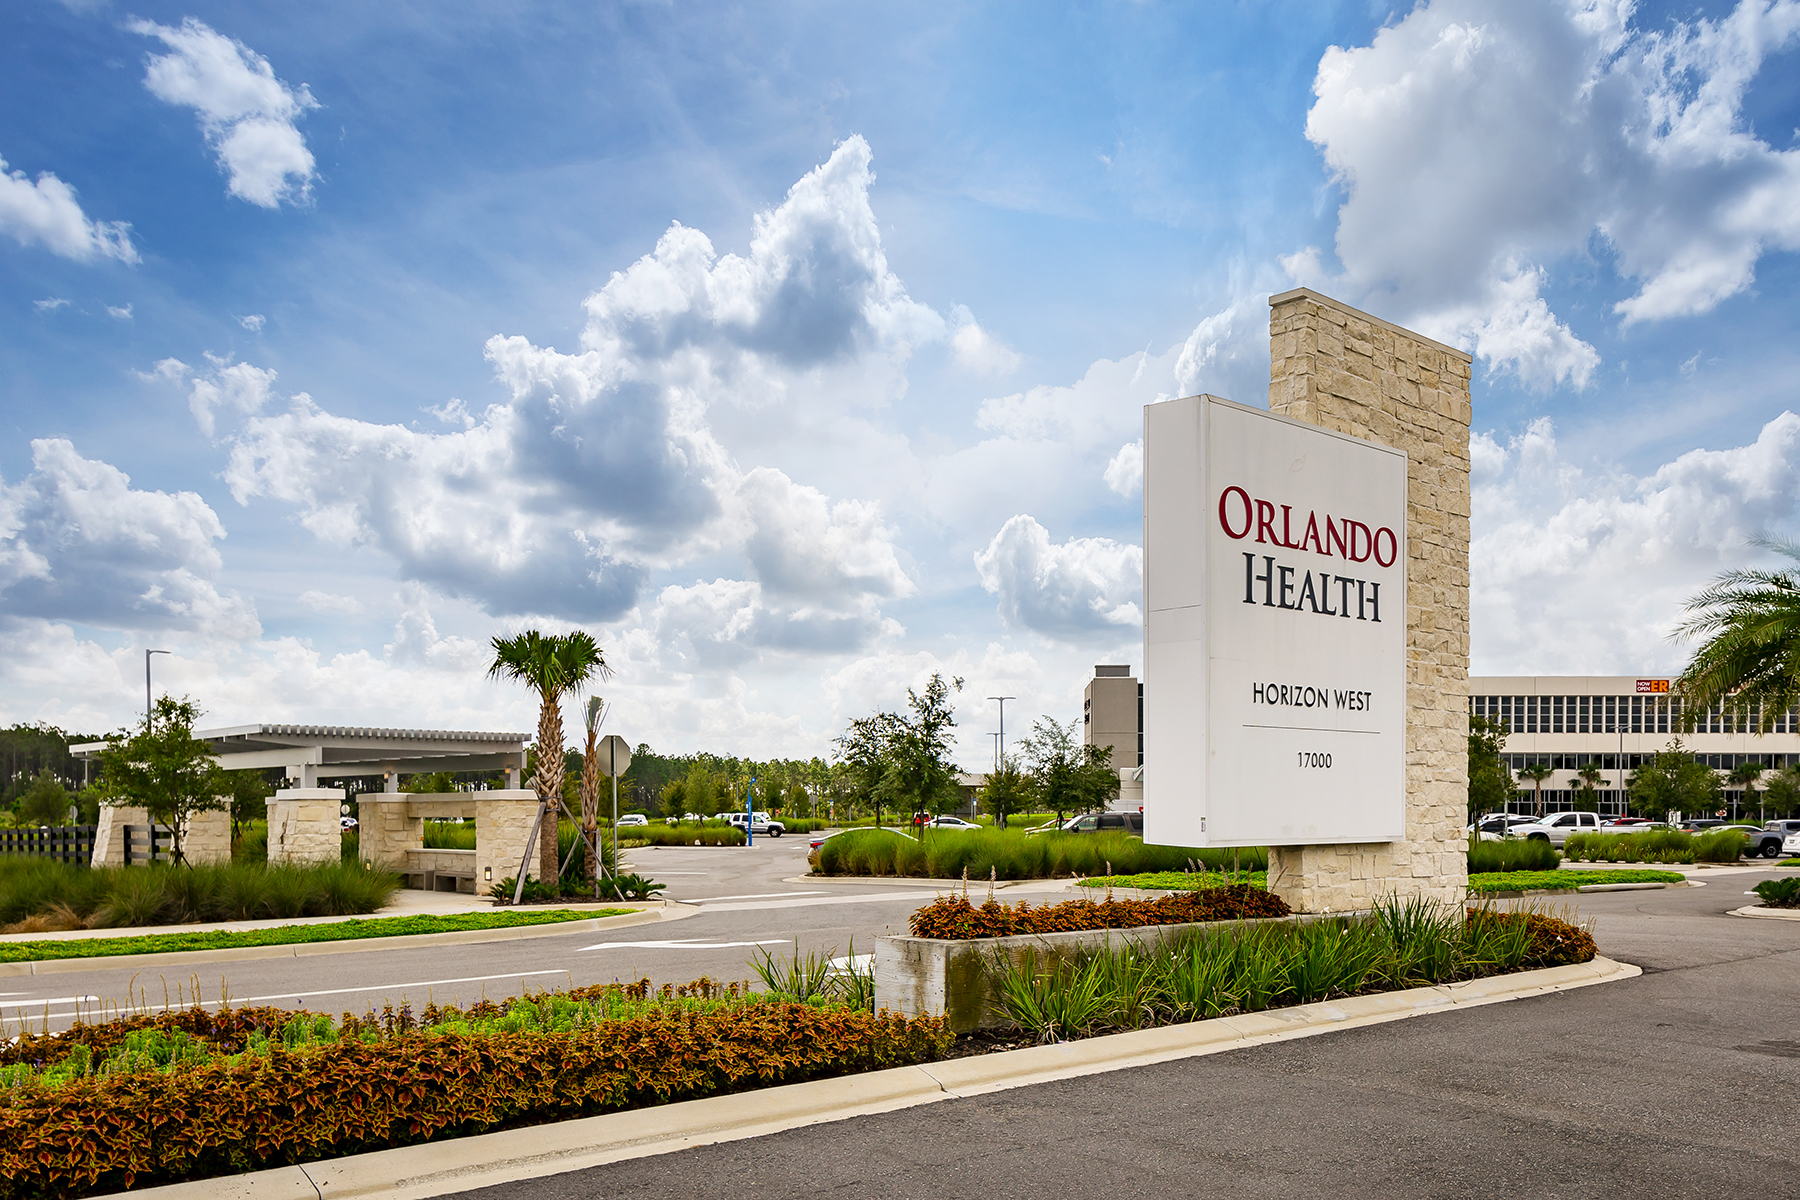 Orlando Health - Horizon West